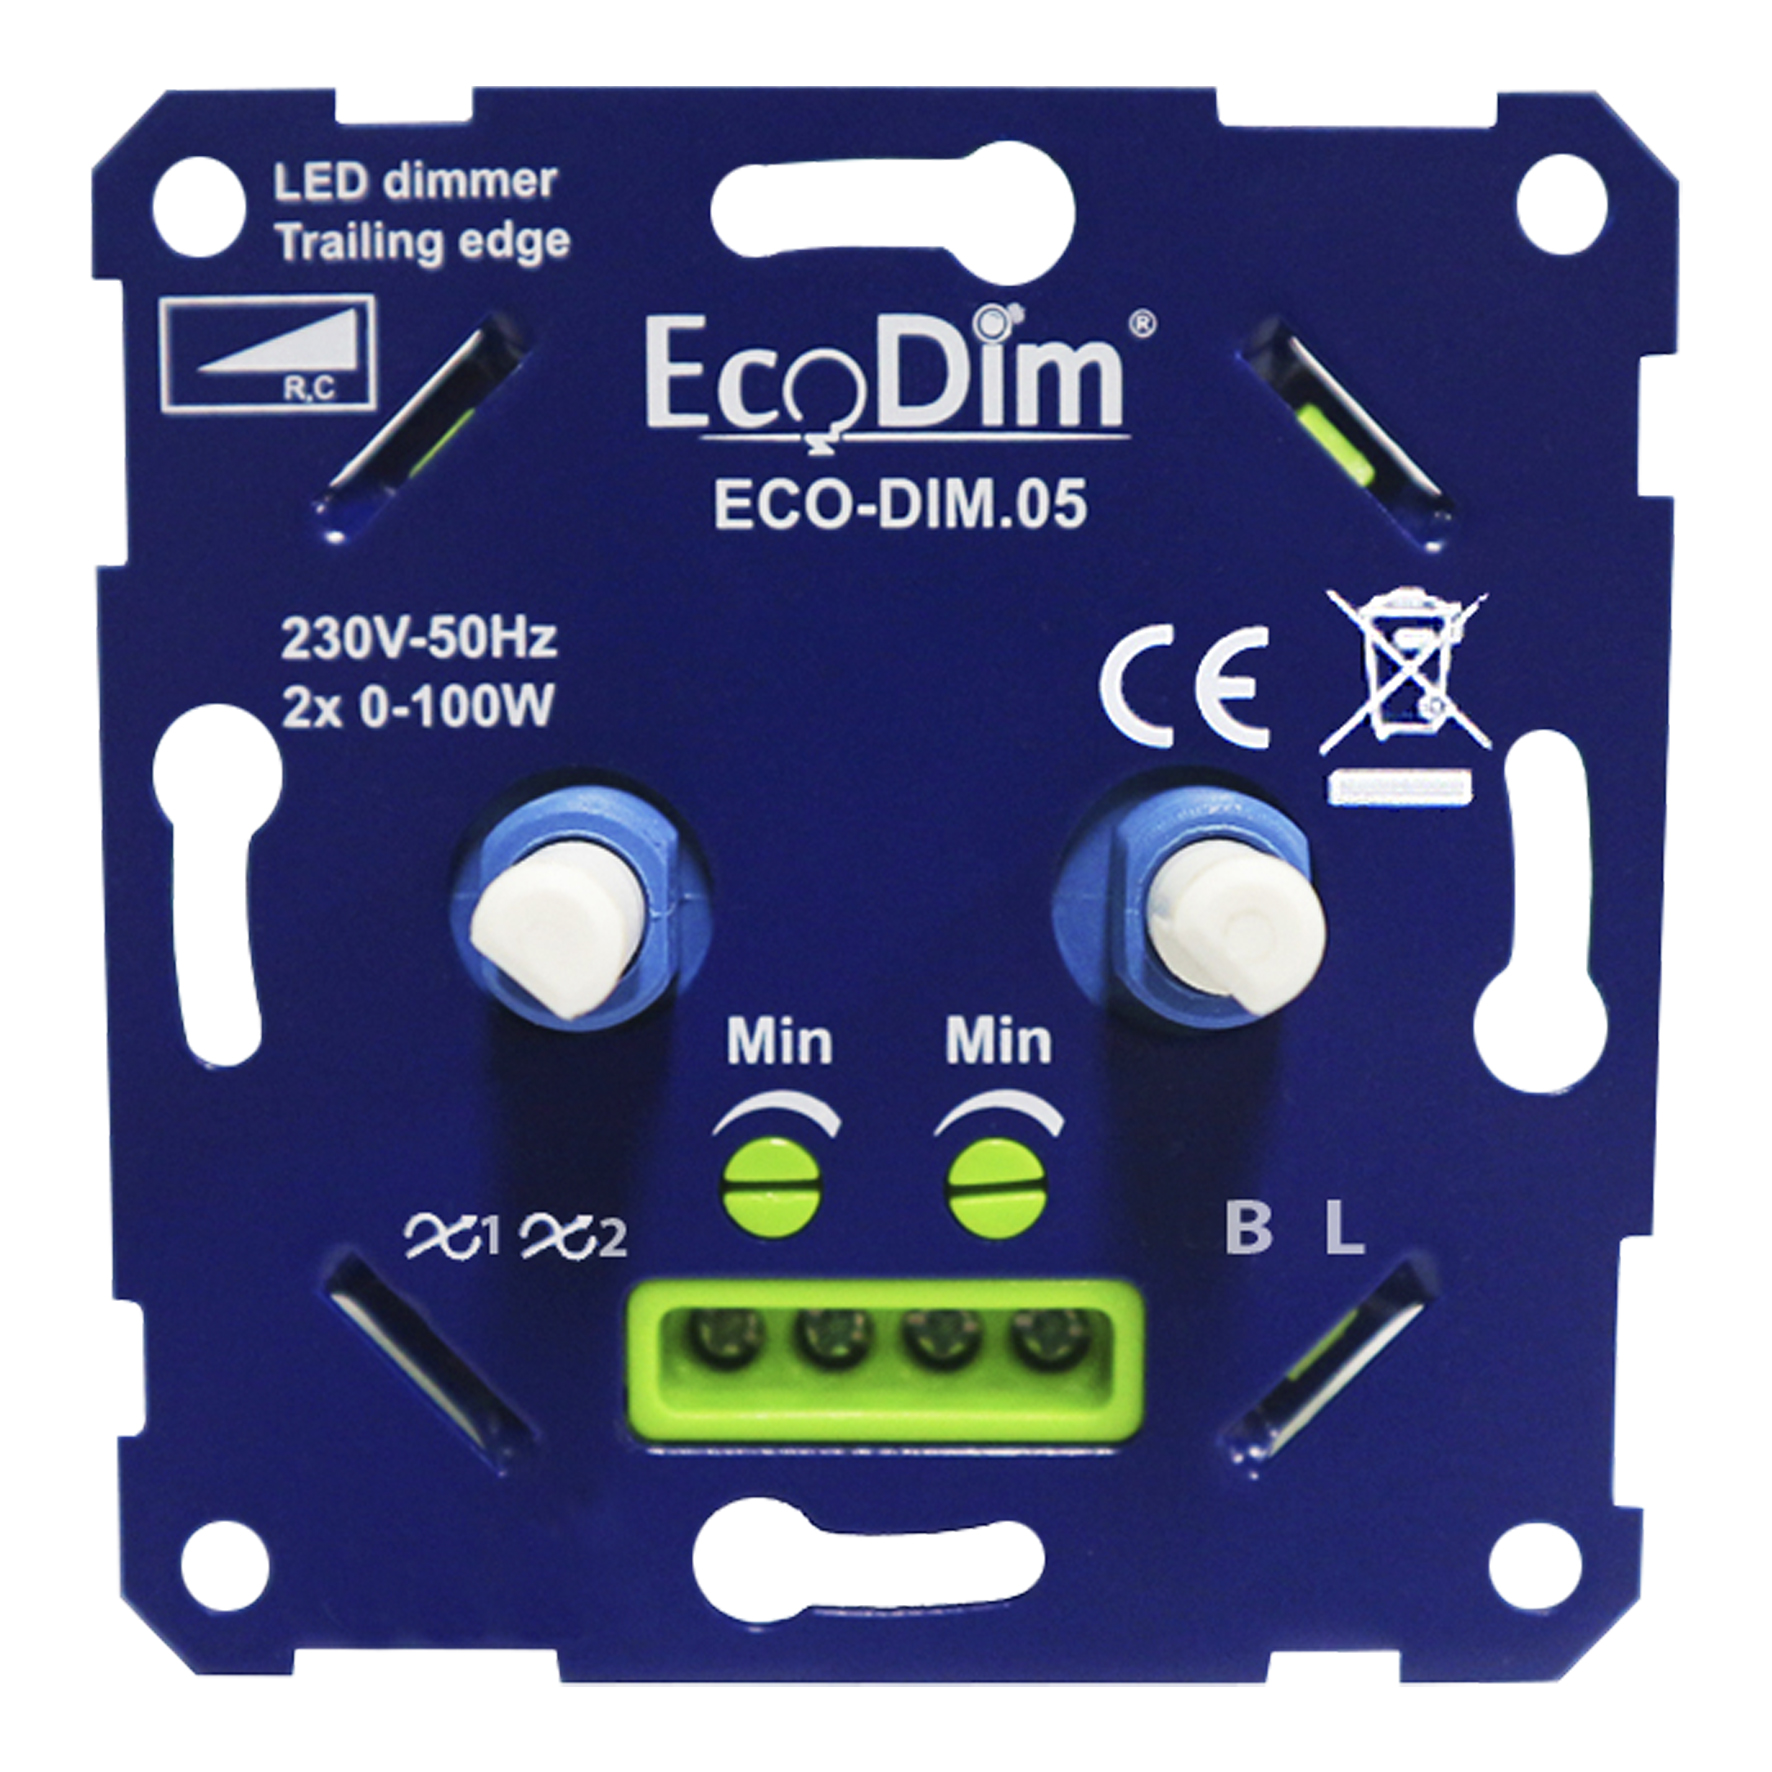 EcoDim ECO-DIM.05 LED Dimmer duo 2x 0-100W Phase Cut (RC)